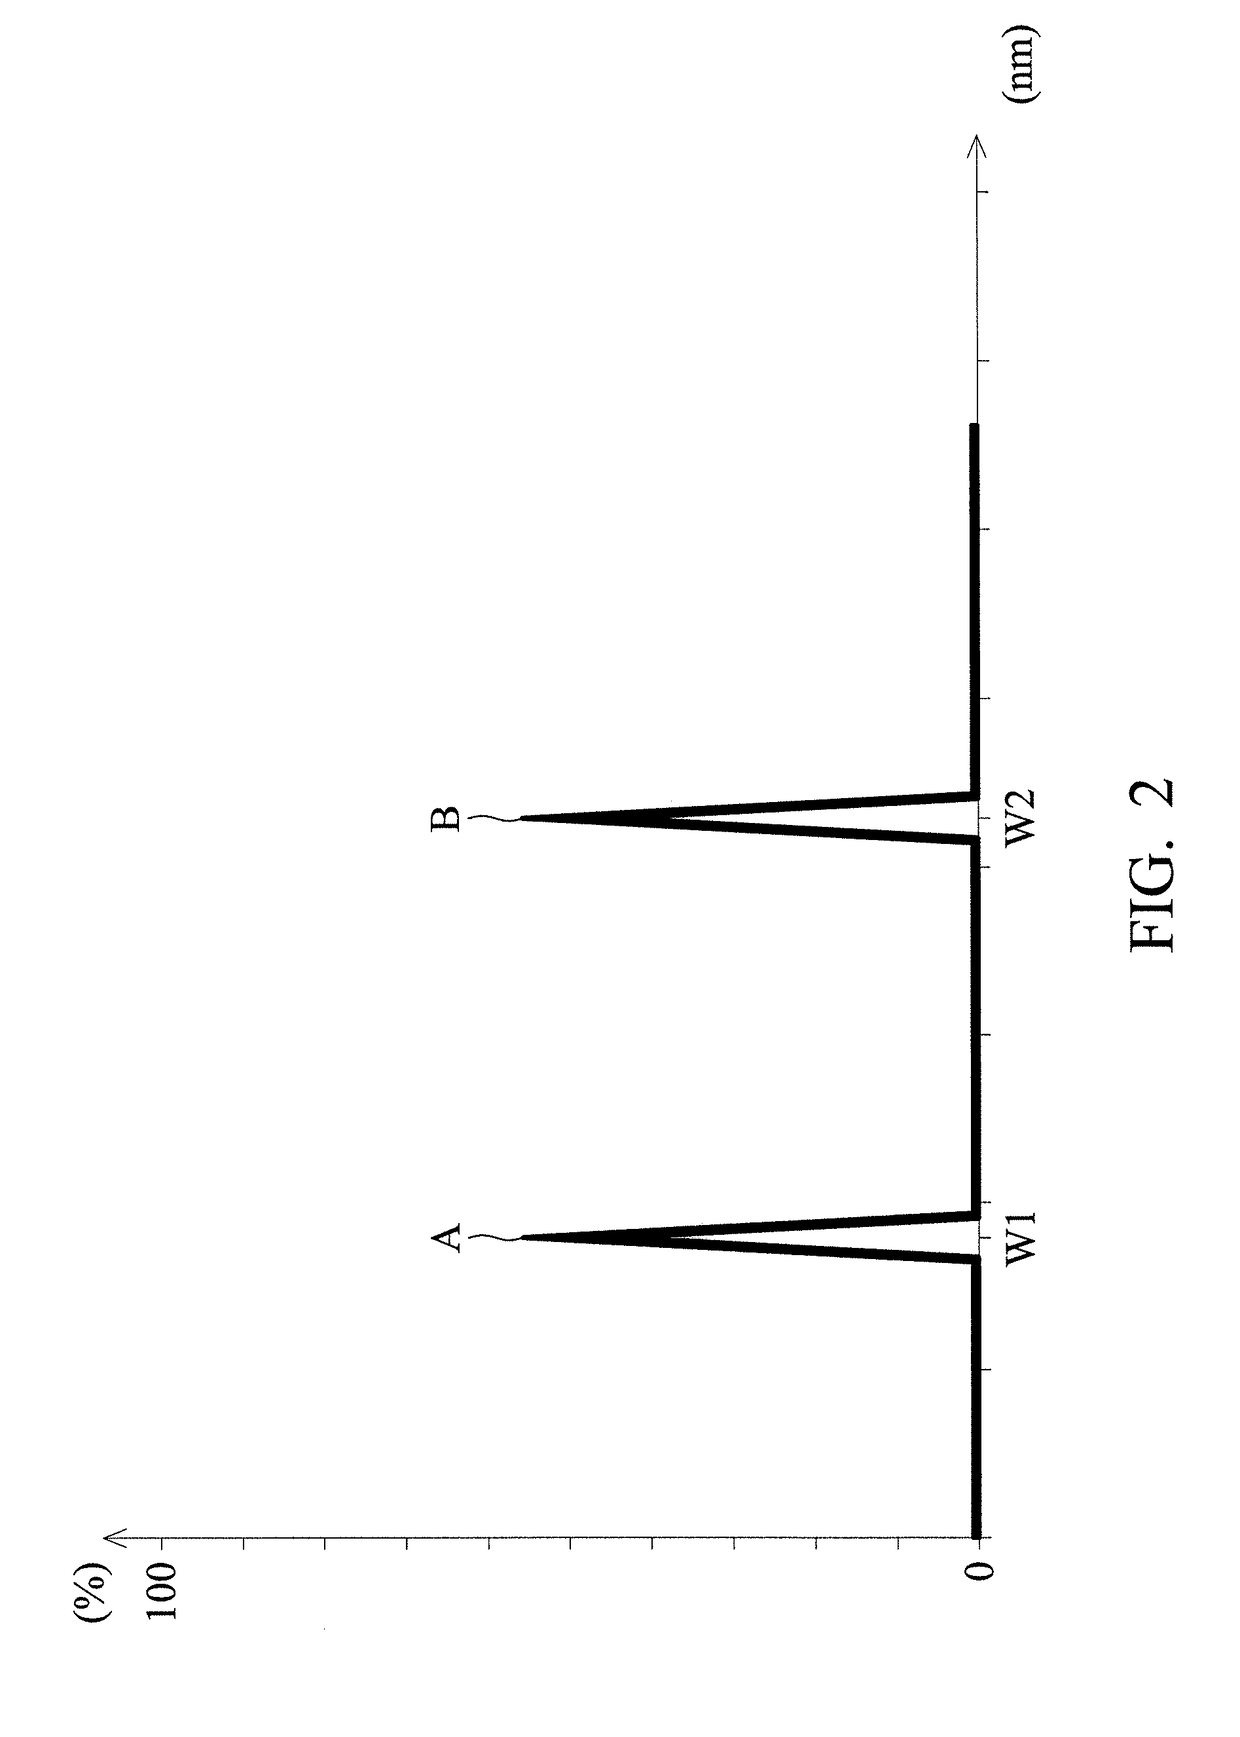 Sensing multiple peak wavelengths using combination of dual-band filters